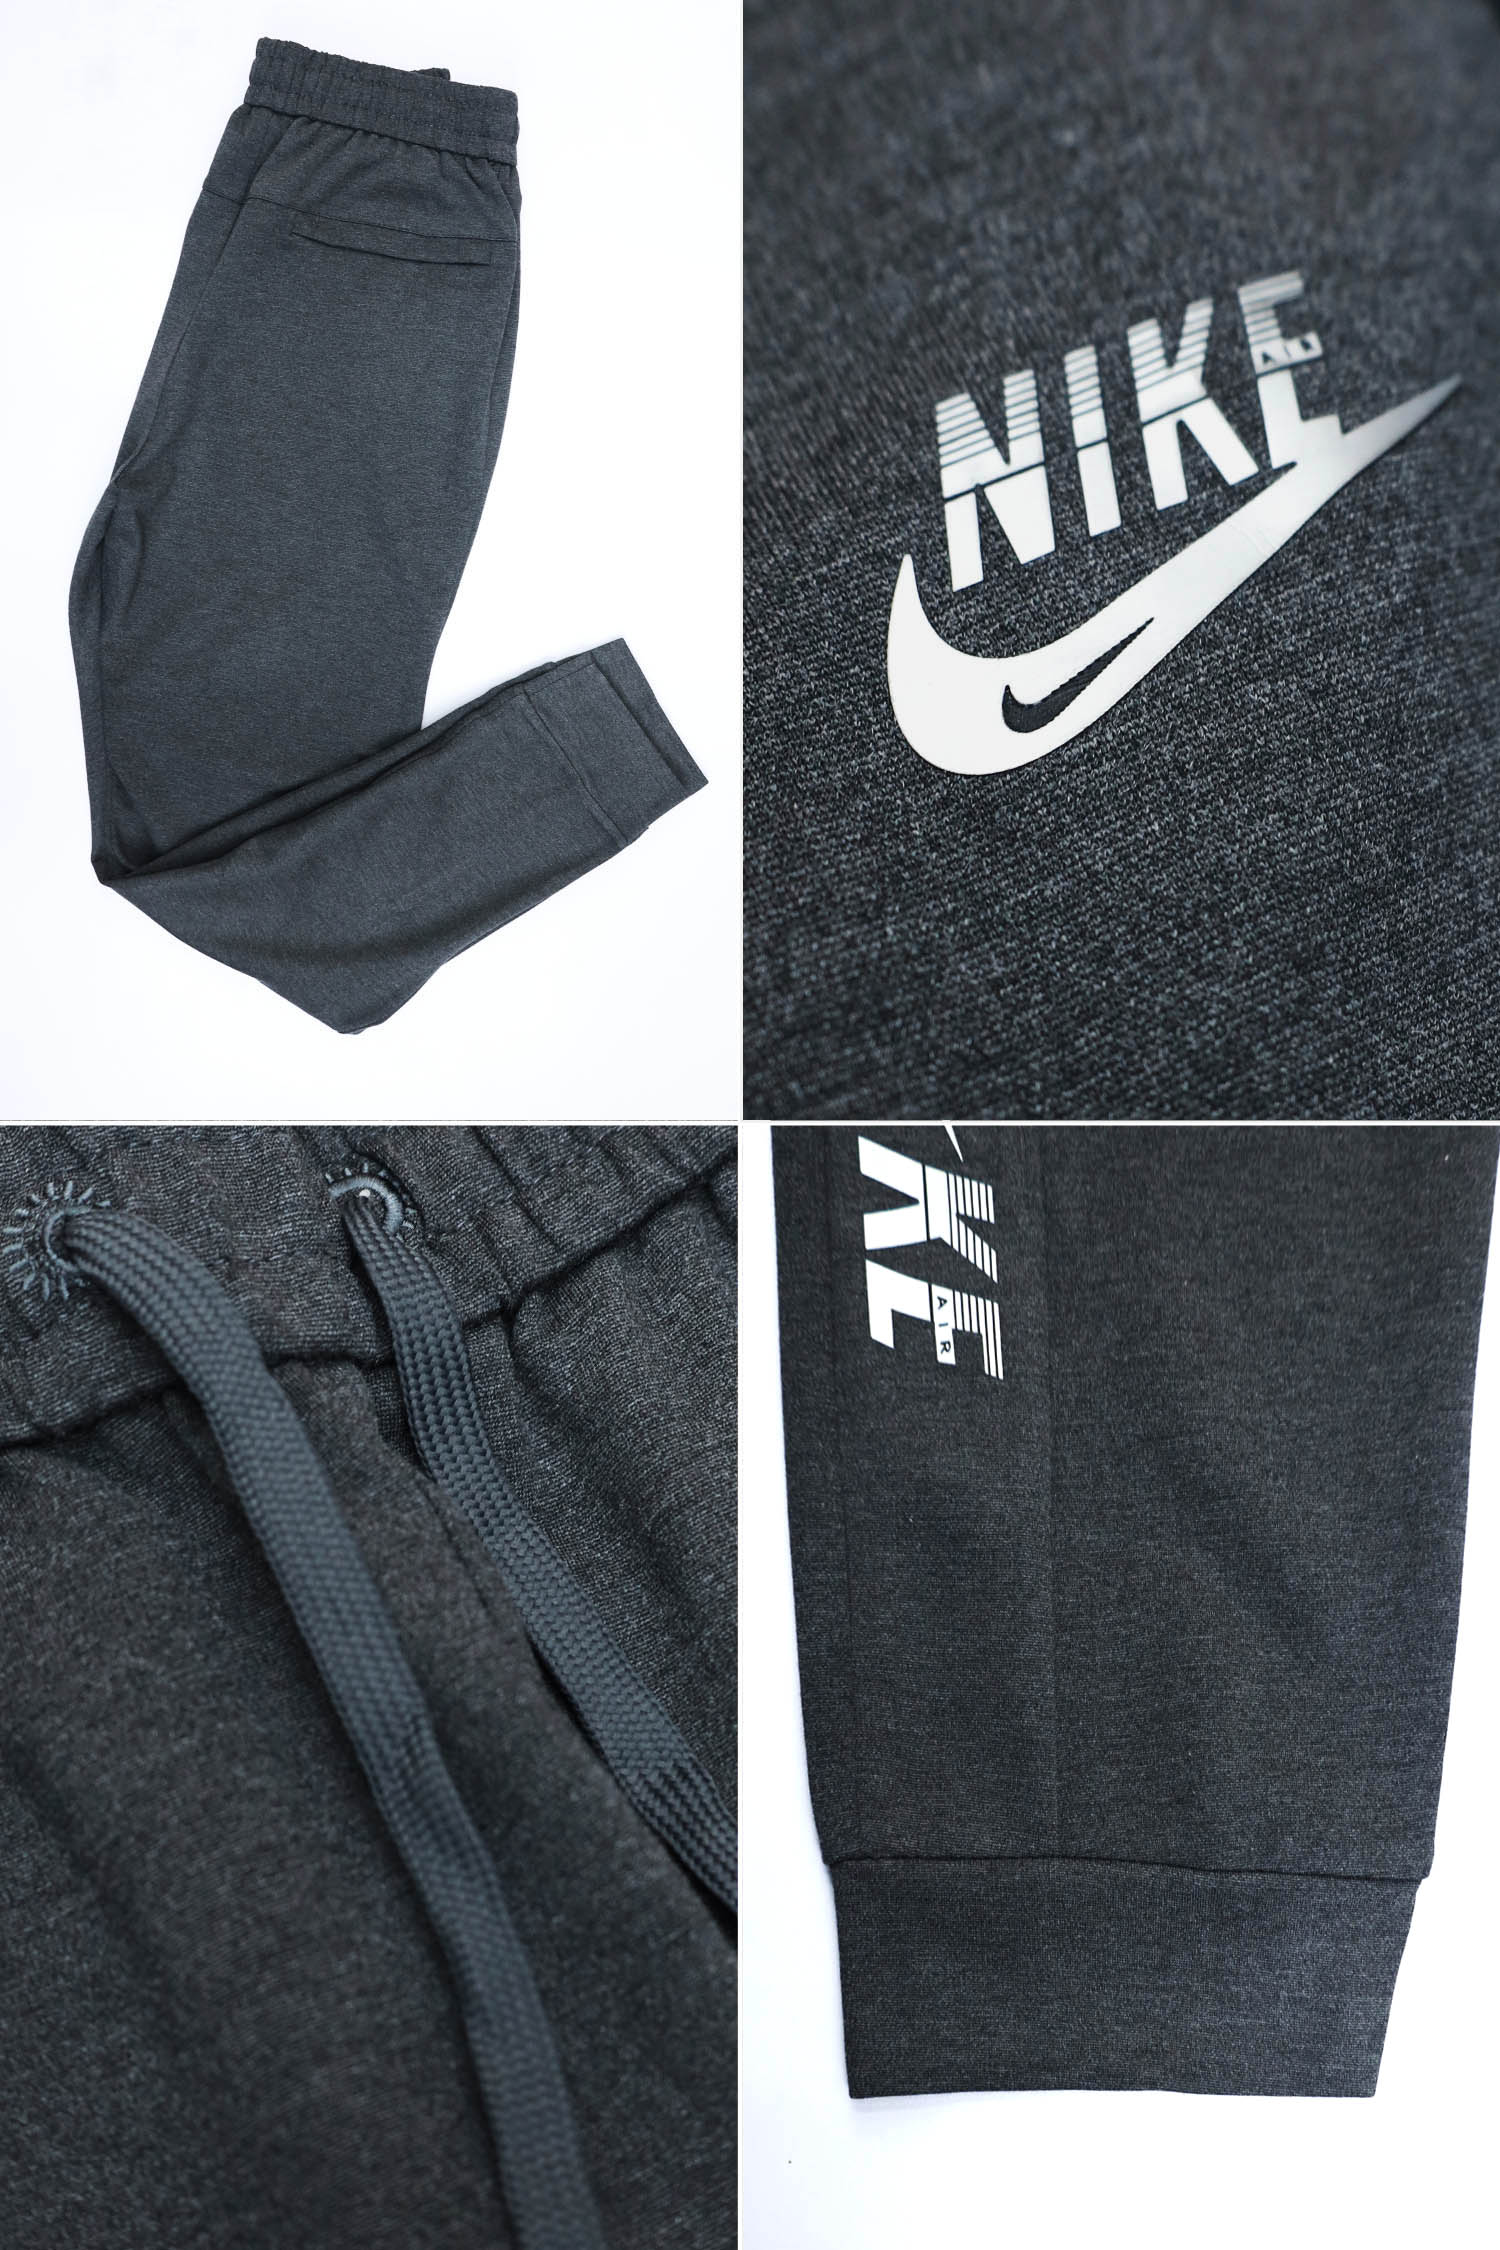 Nke Side Stripe With Reflector Logo Men Branded Trouser In Charcoal